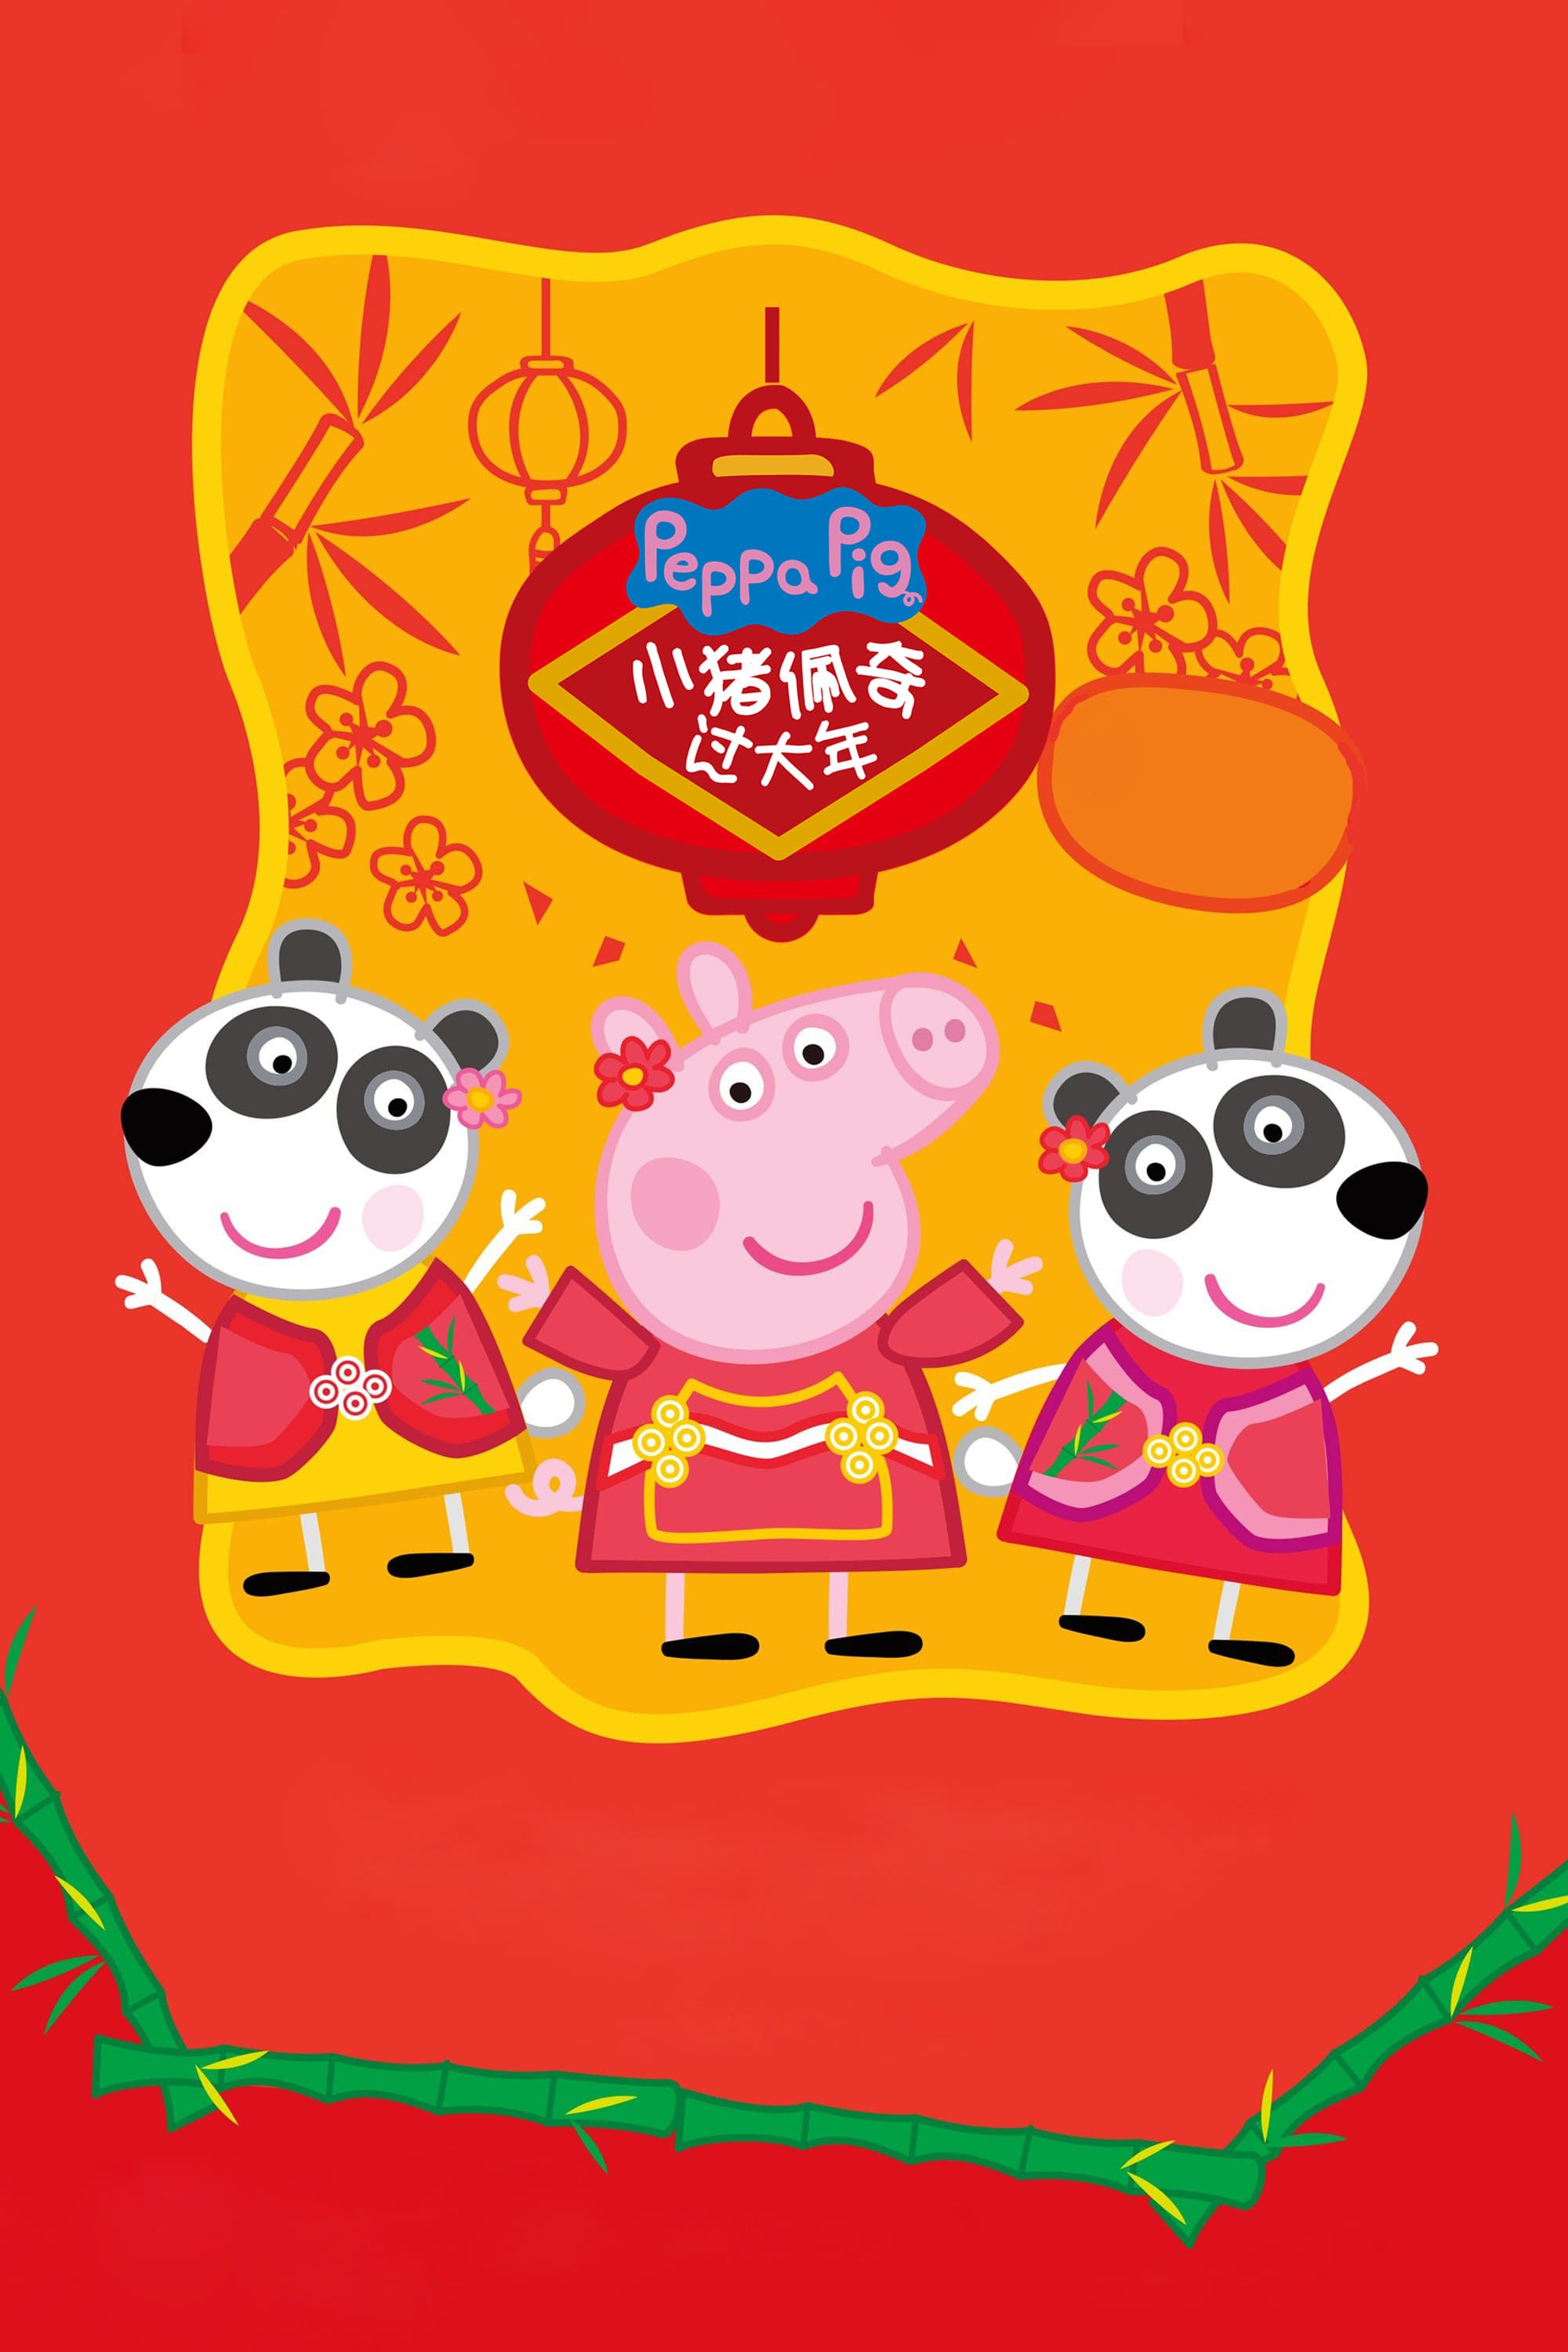 Peppa Pig: Le film du Nouvel an chinois